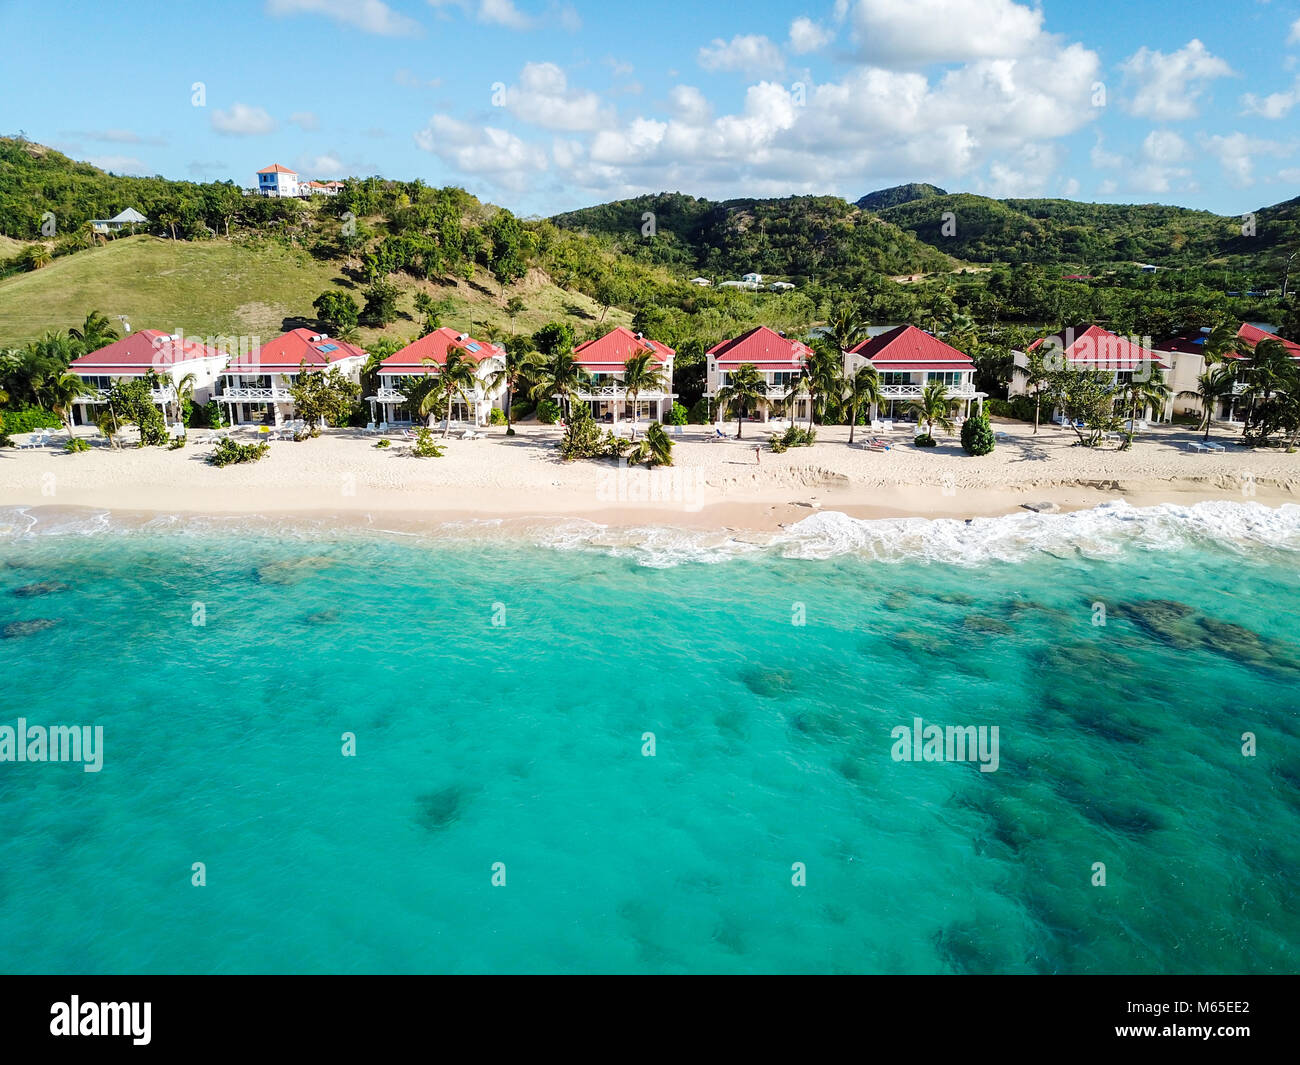 Galley Bay Beach Resort and Spa, Antigua Foto de stock